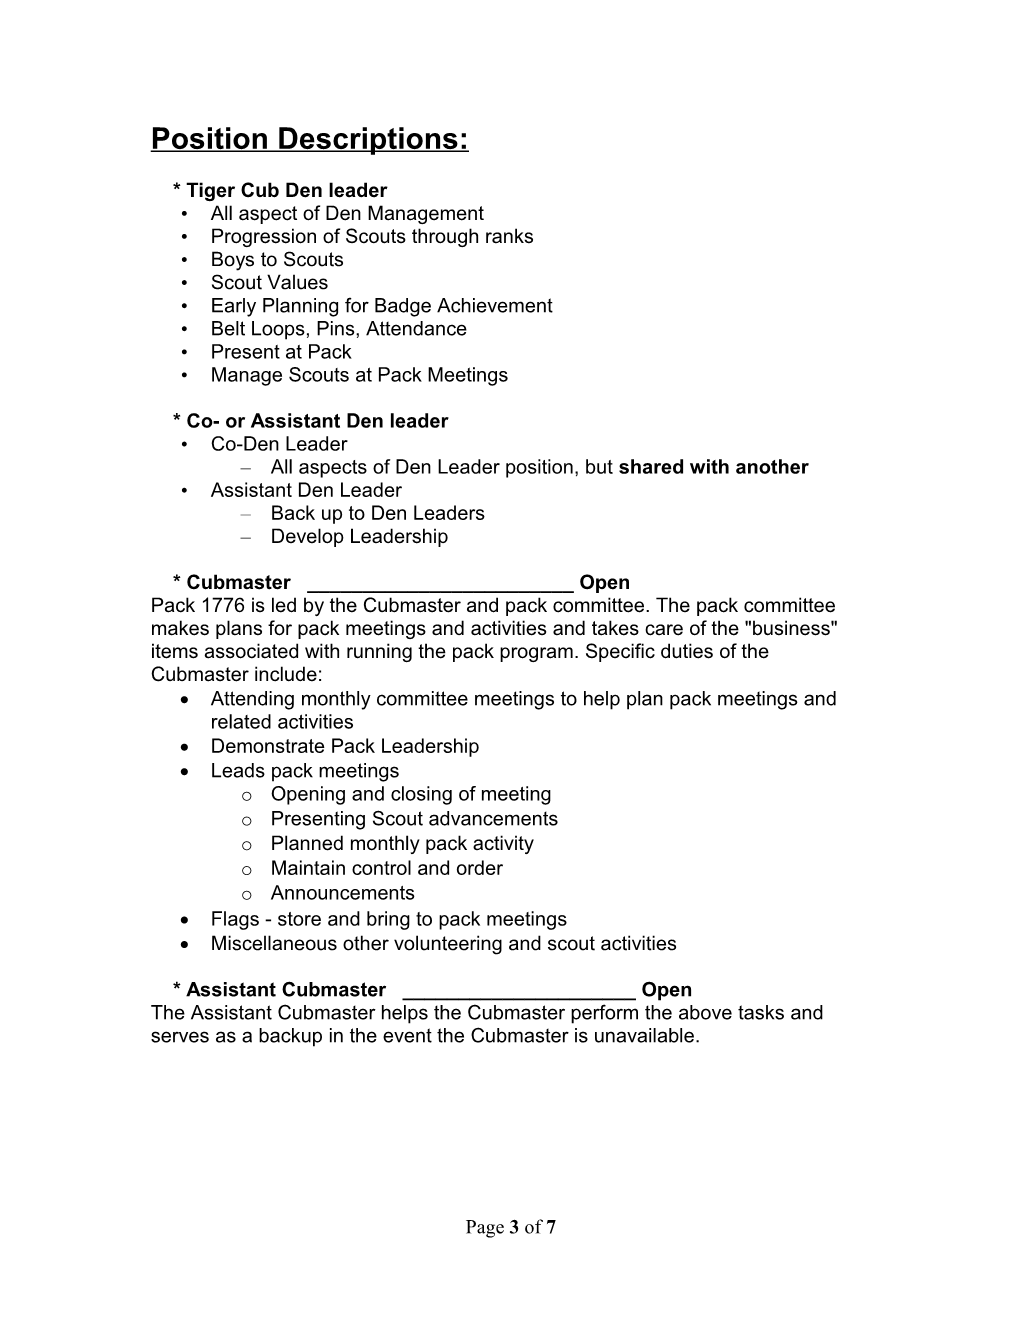 Pack 1776 Parent Volunteer Positions